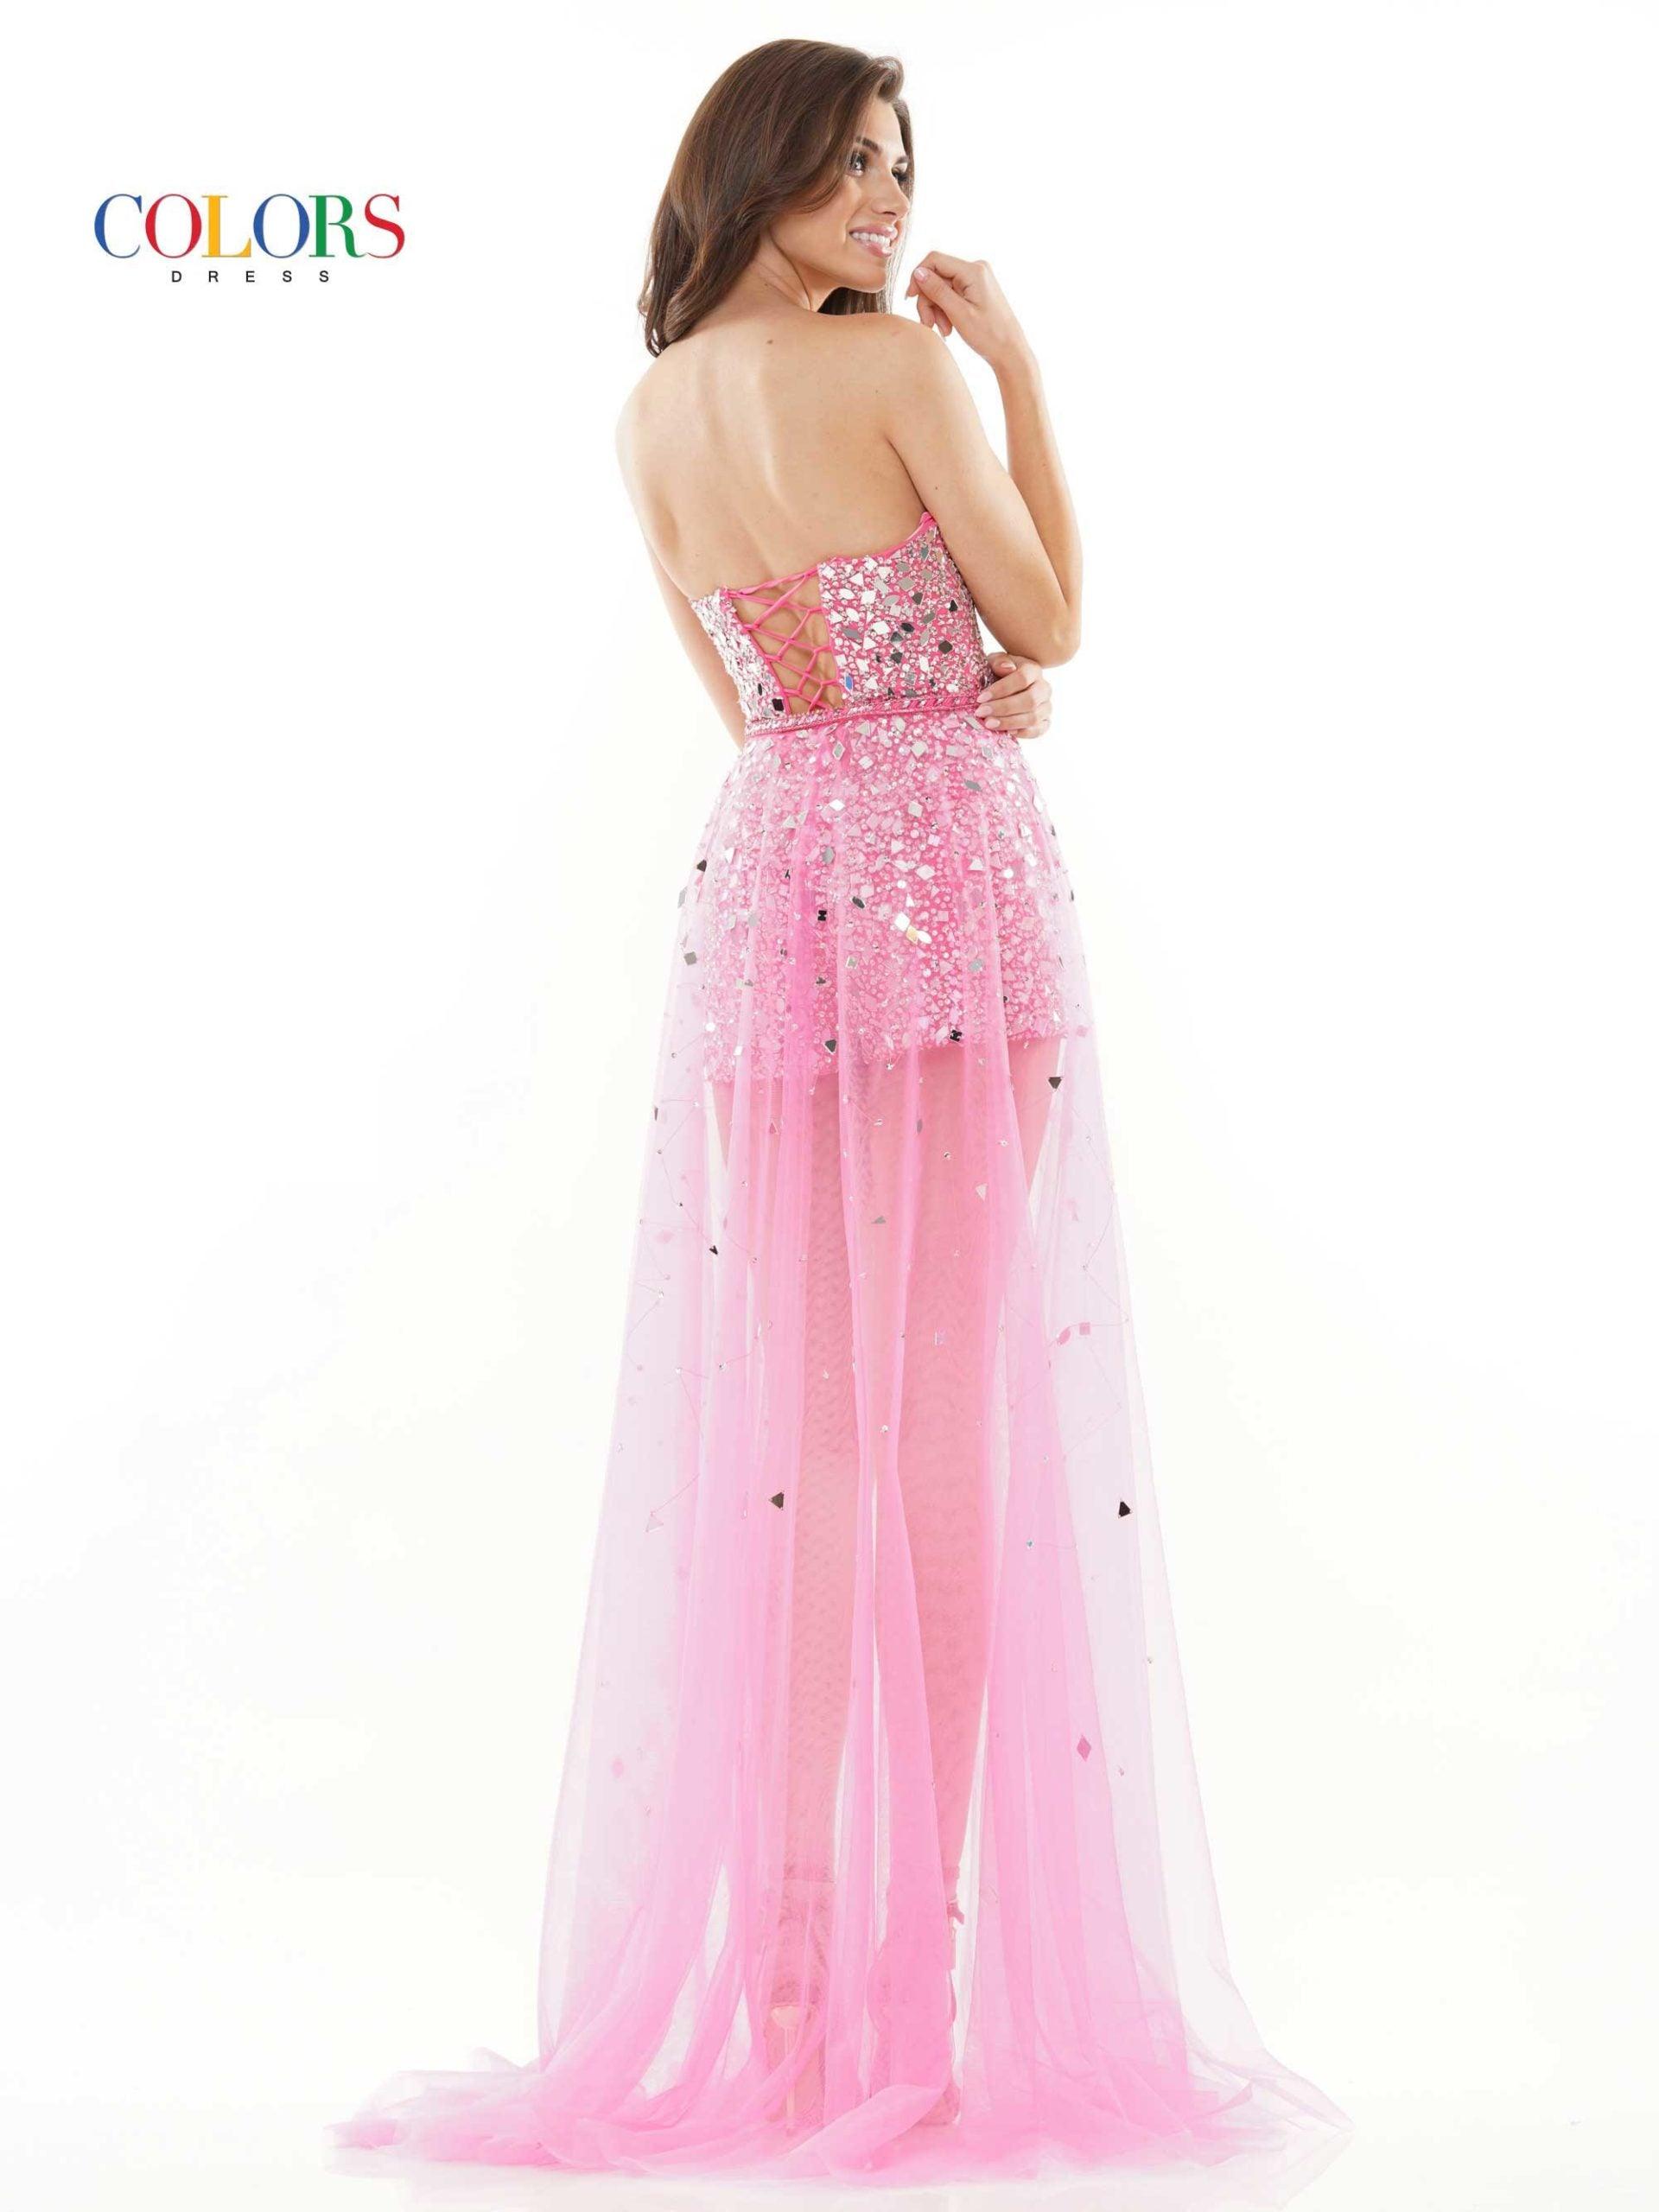 Colors Prom Short Romper Tulle Skirt Overlay 2445 - The Dress Outlet